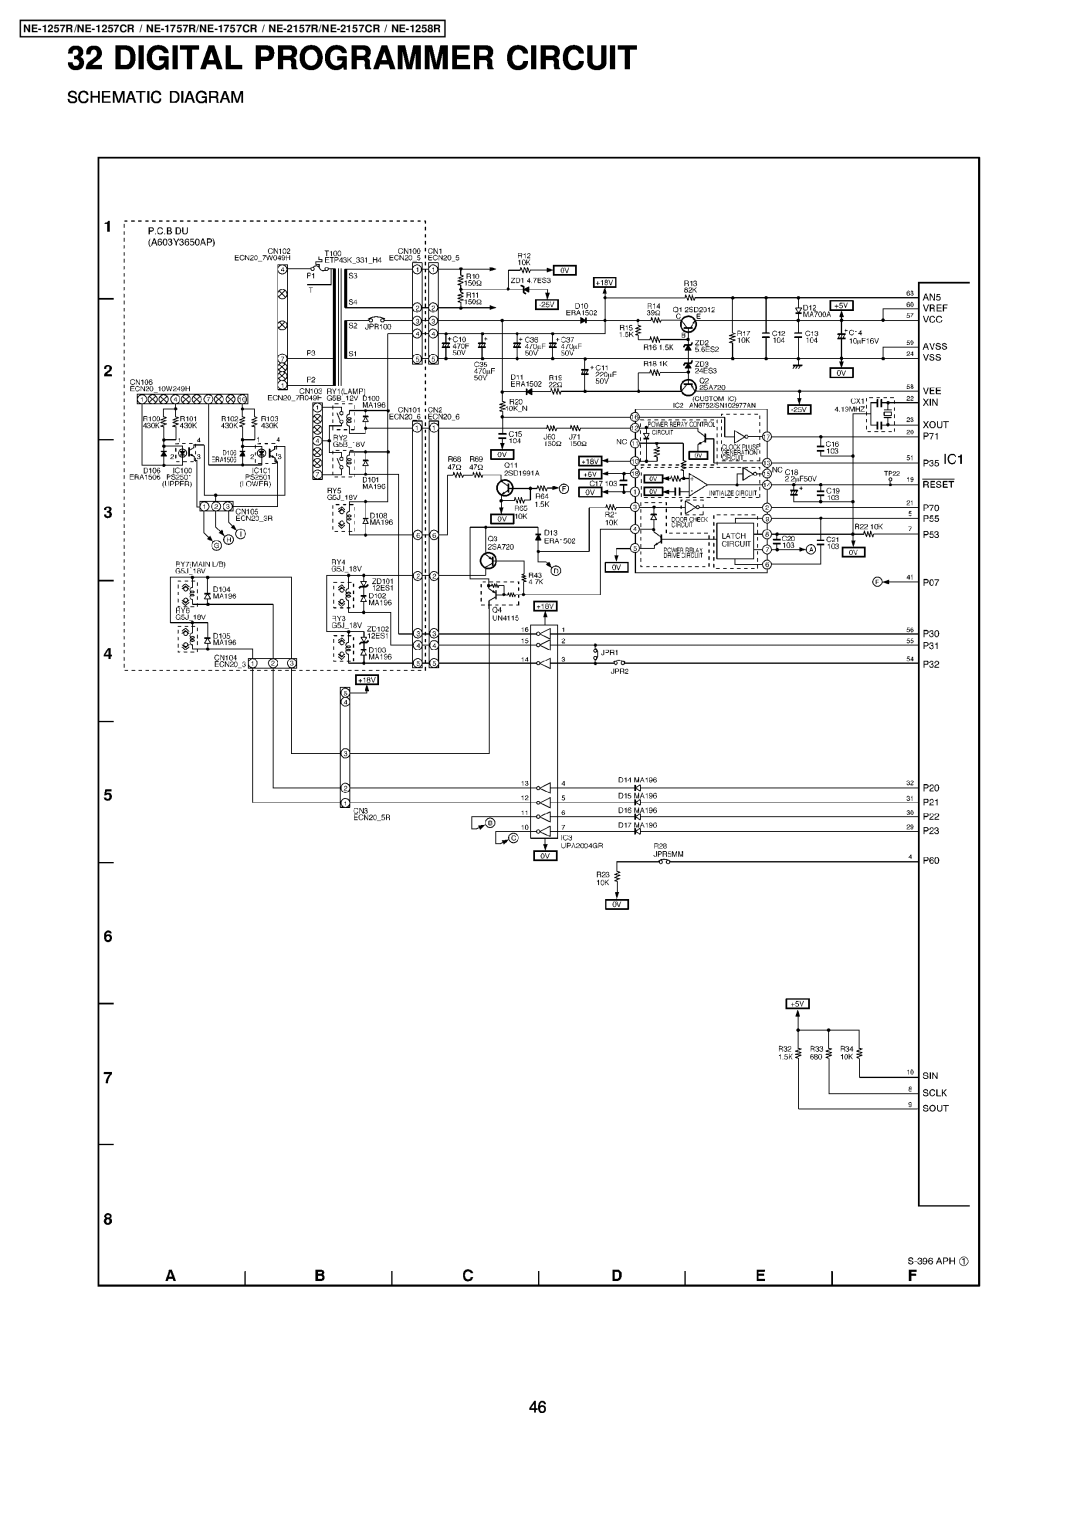 Panasonic NE-1757CR, NE-2157CR, NE-1257CR manual Digital Programmer Circuit, Schematic Diagram 